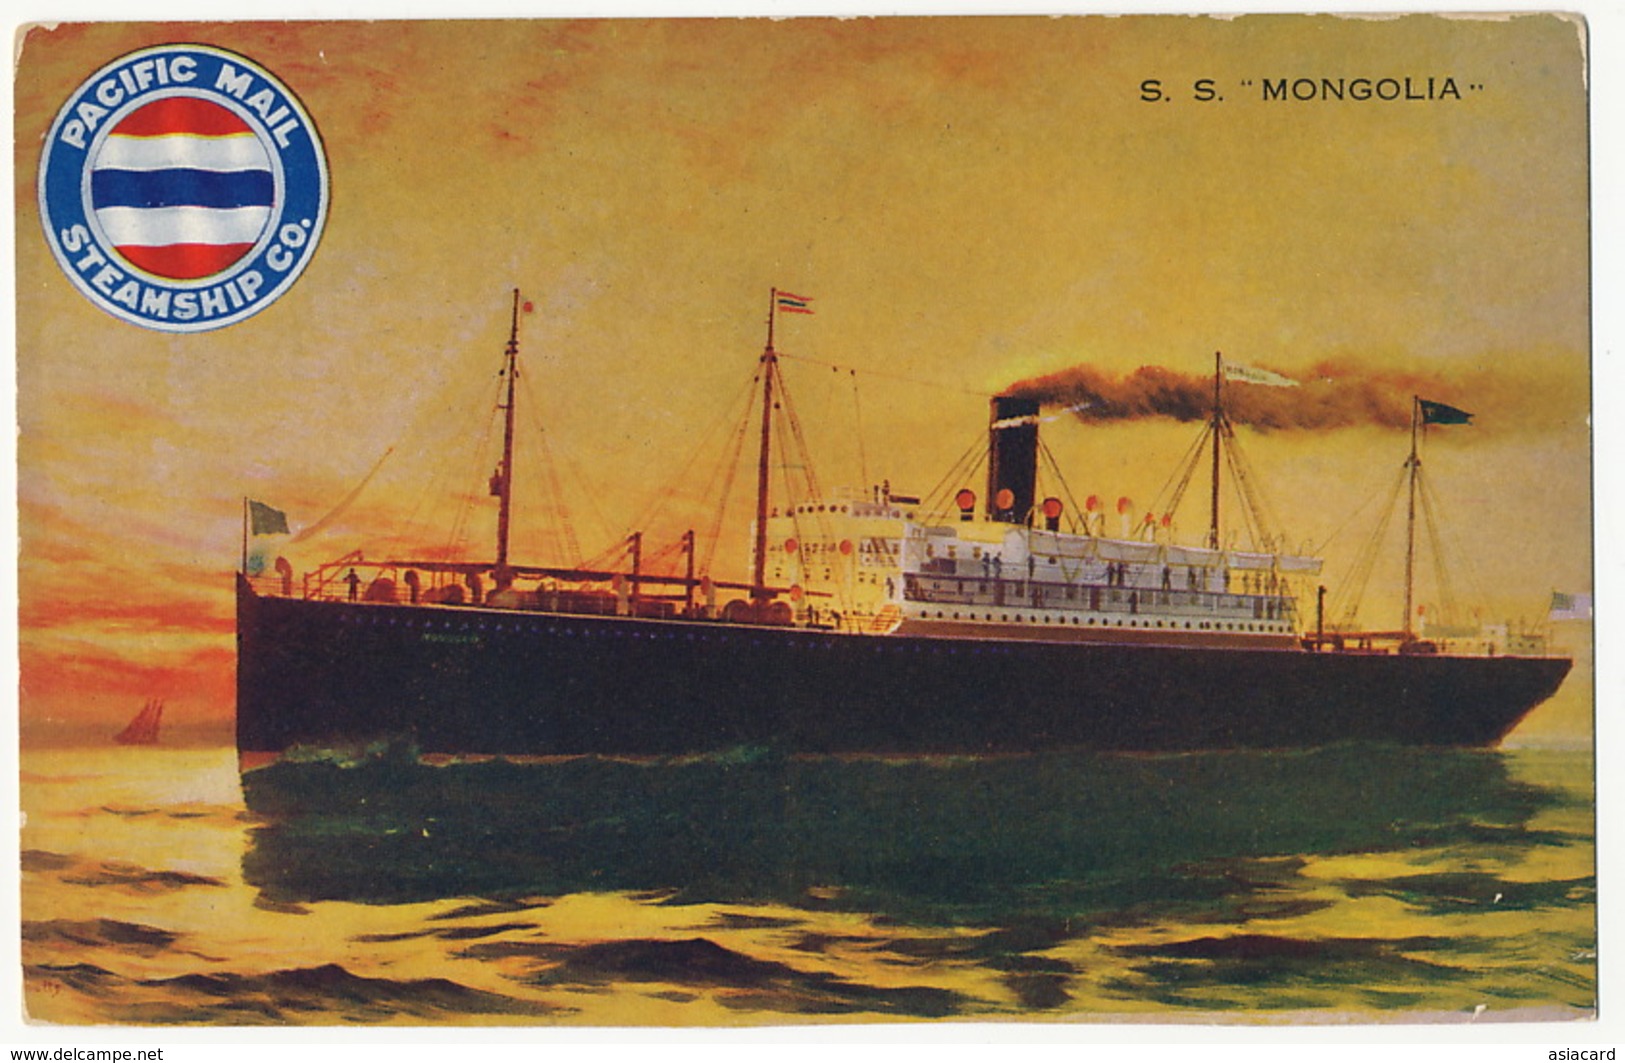 S.S. " Mongolia " Paquebot Ship Pacific Mail Steamship Co. - Mongolië